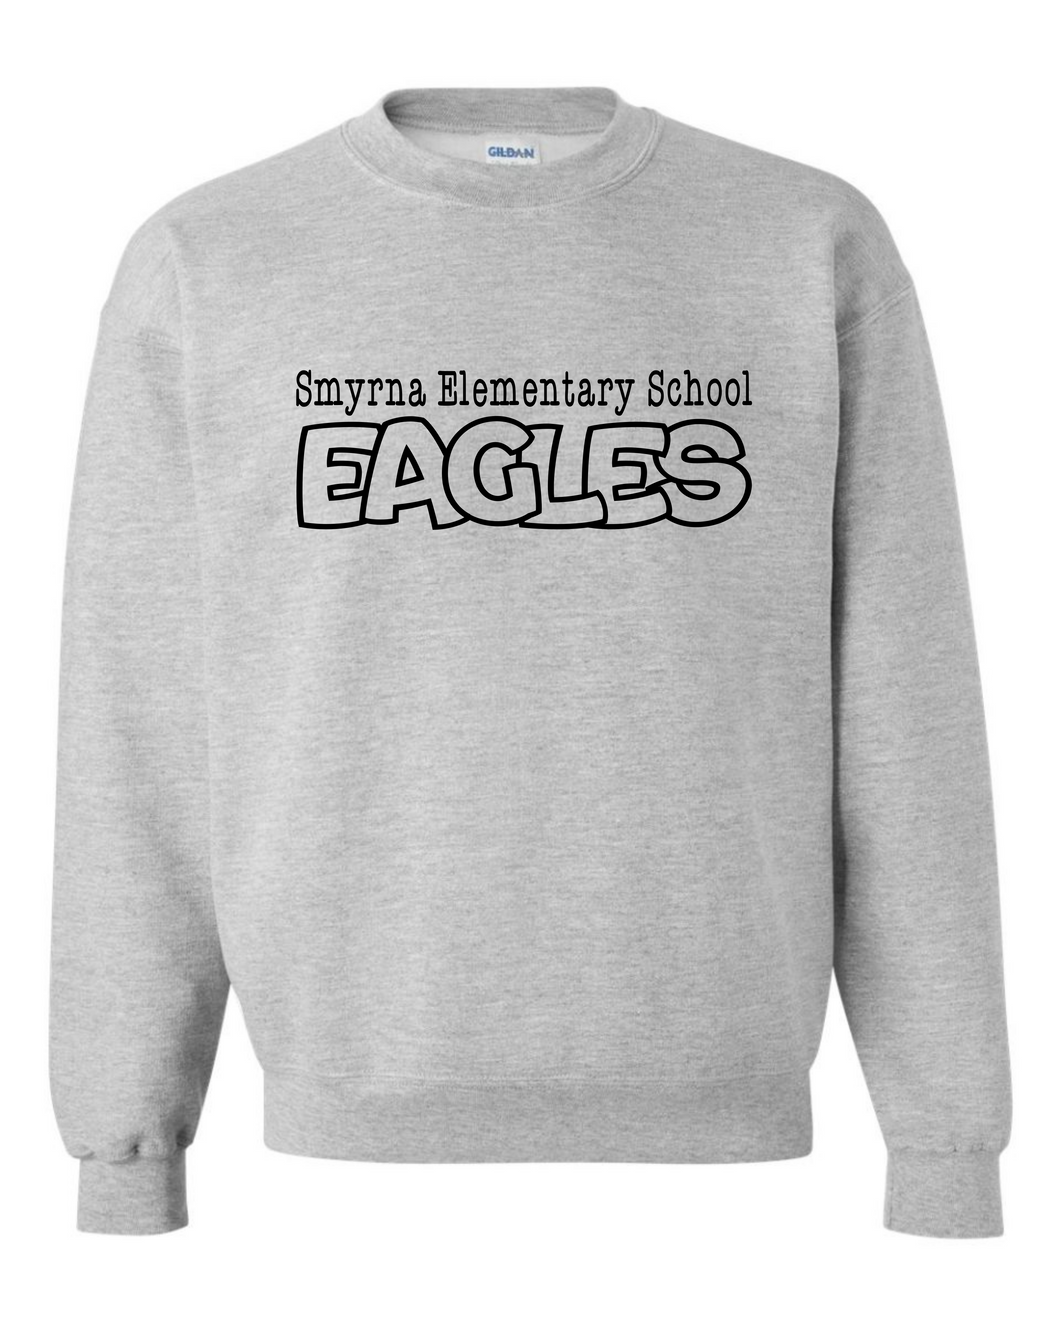 Smyrna Elementary School Eagles Sweatshirt